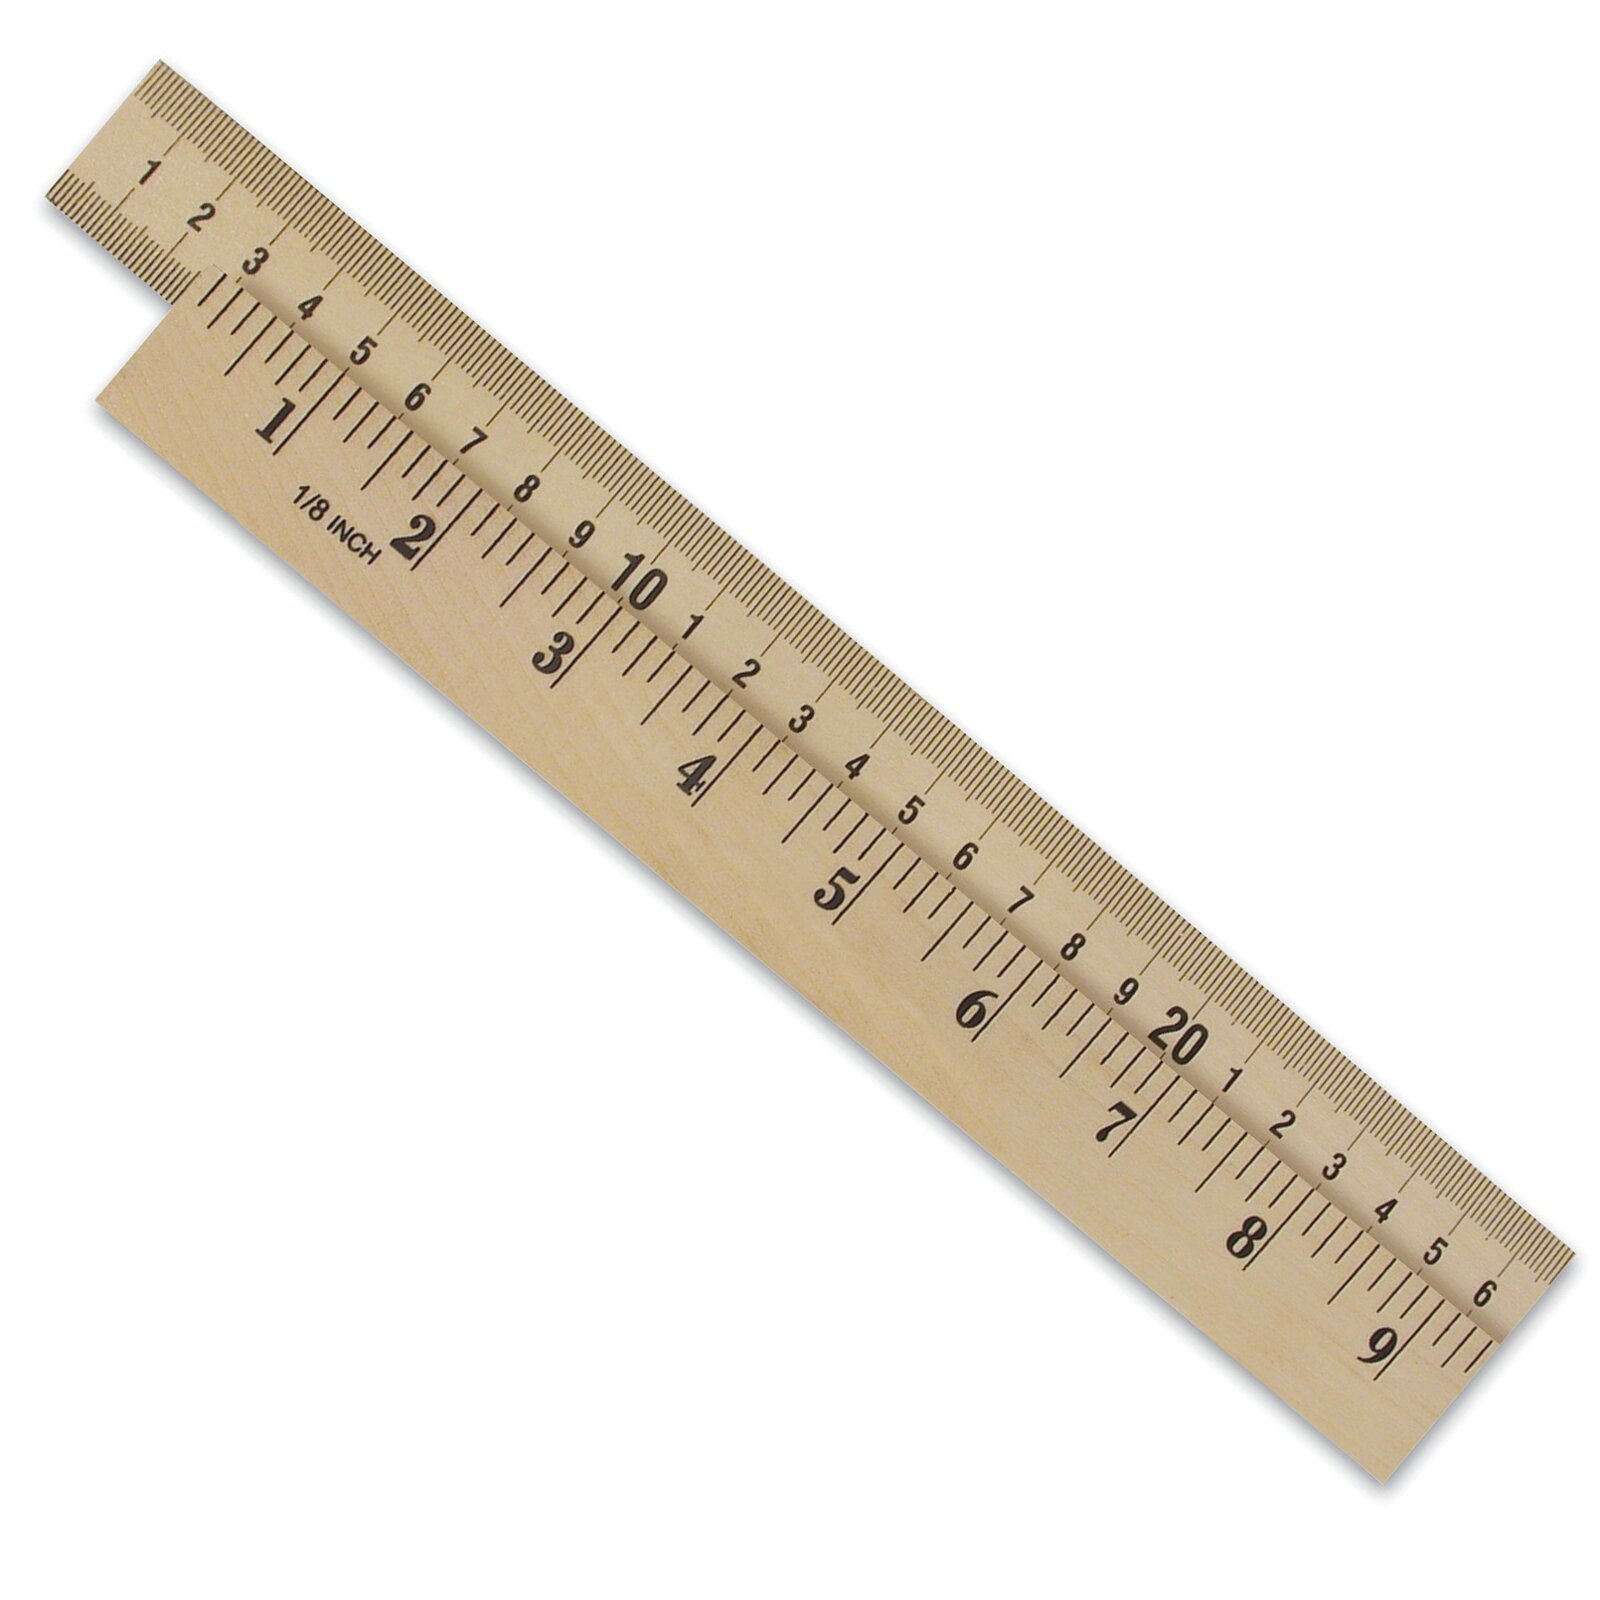 Meter Stick, each